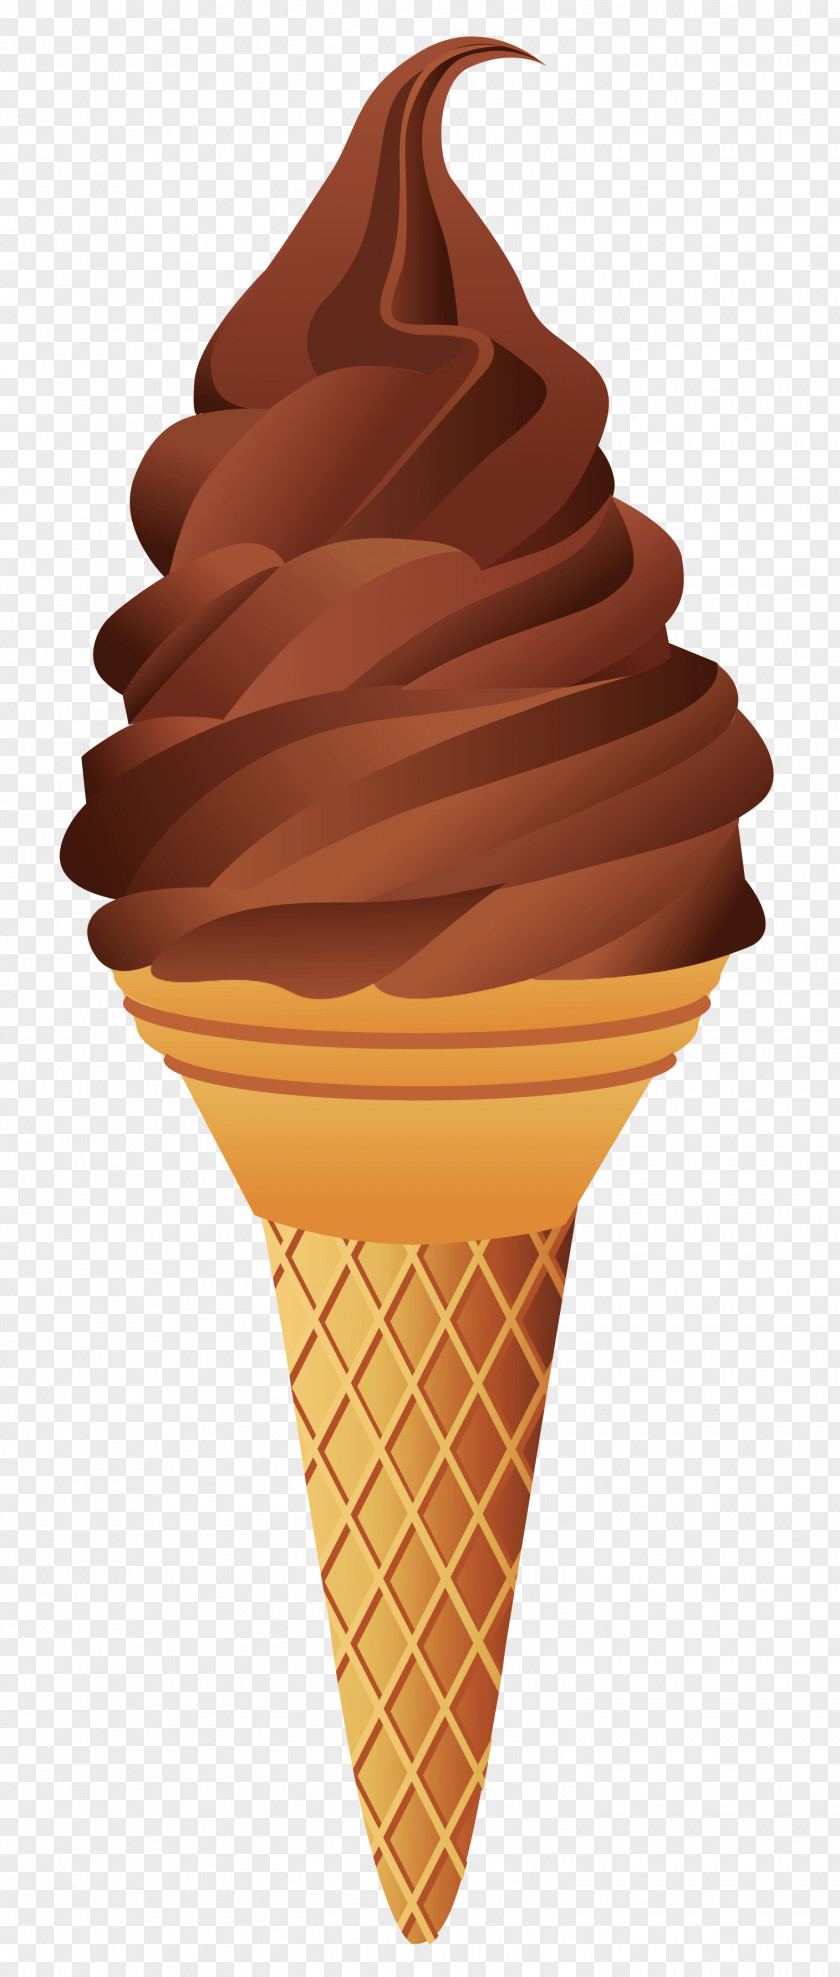 Ice Cream Image Chocolate Cone Sundae PNG